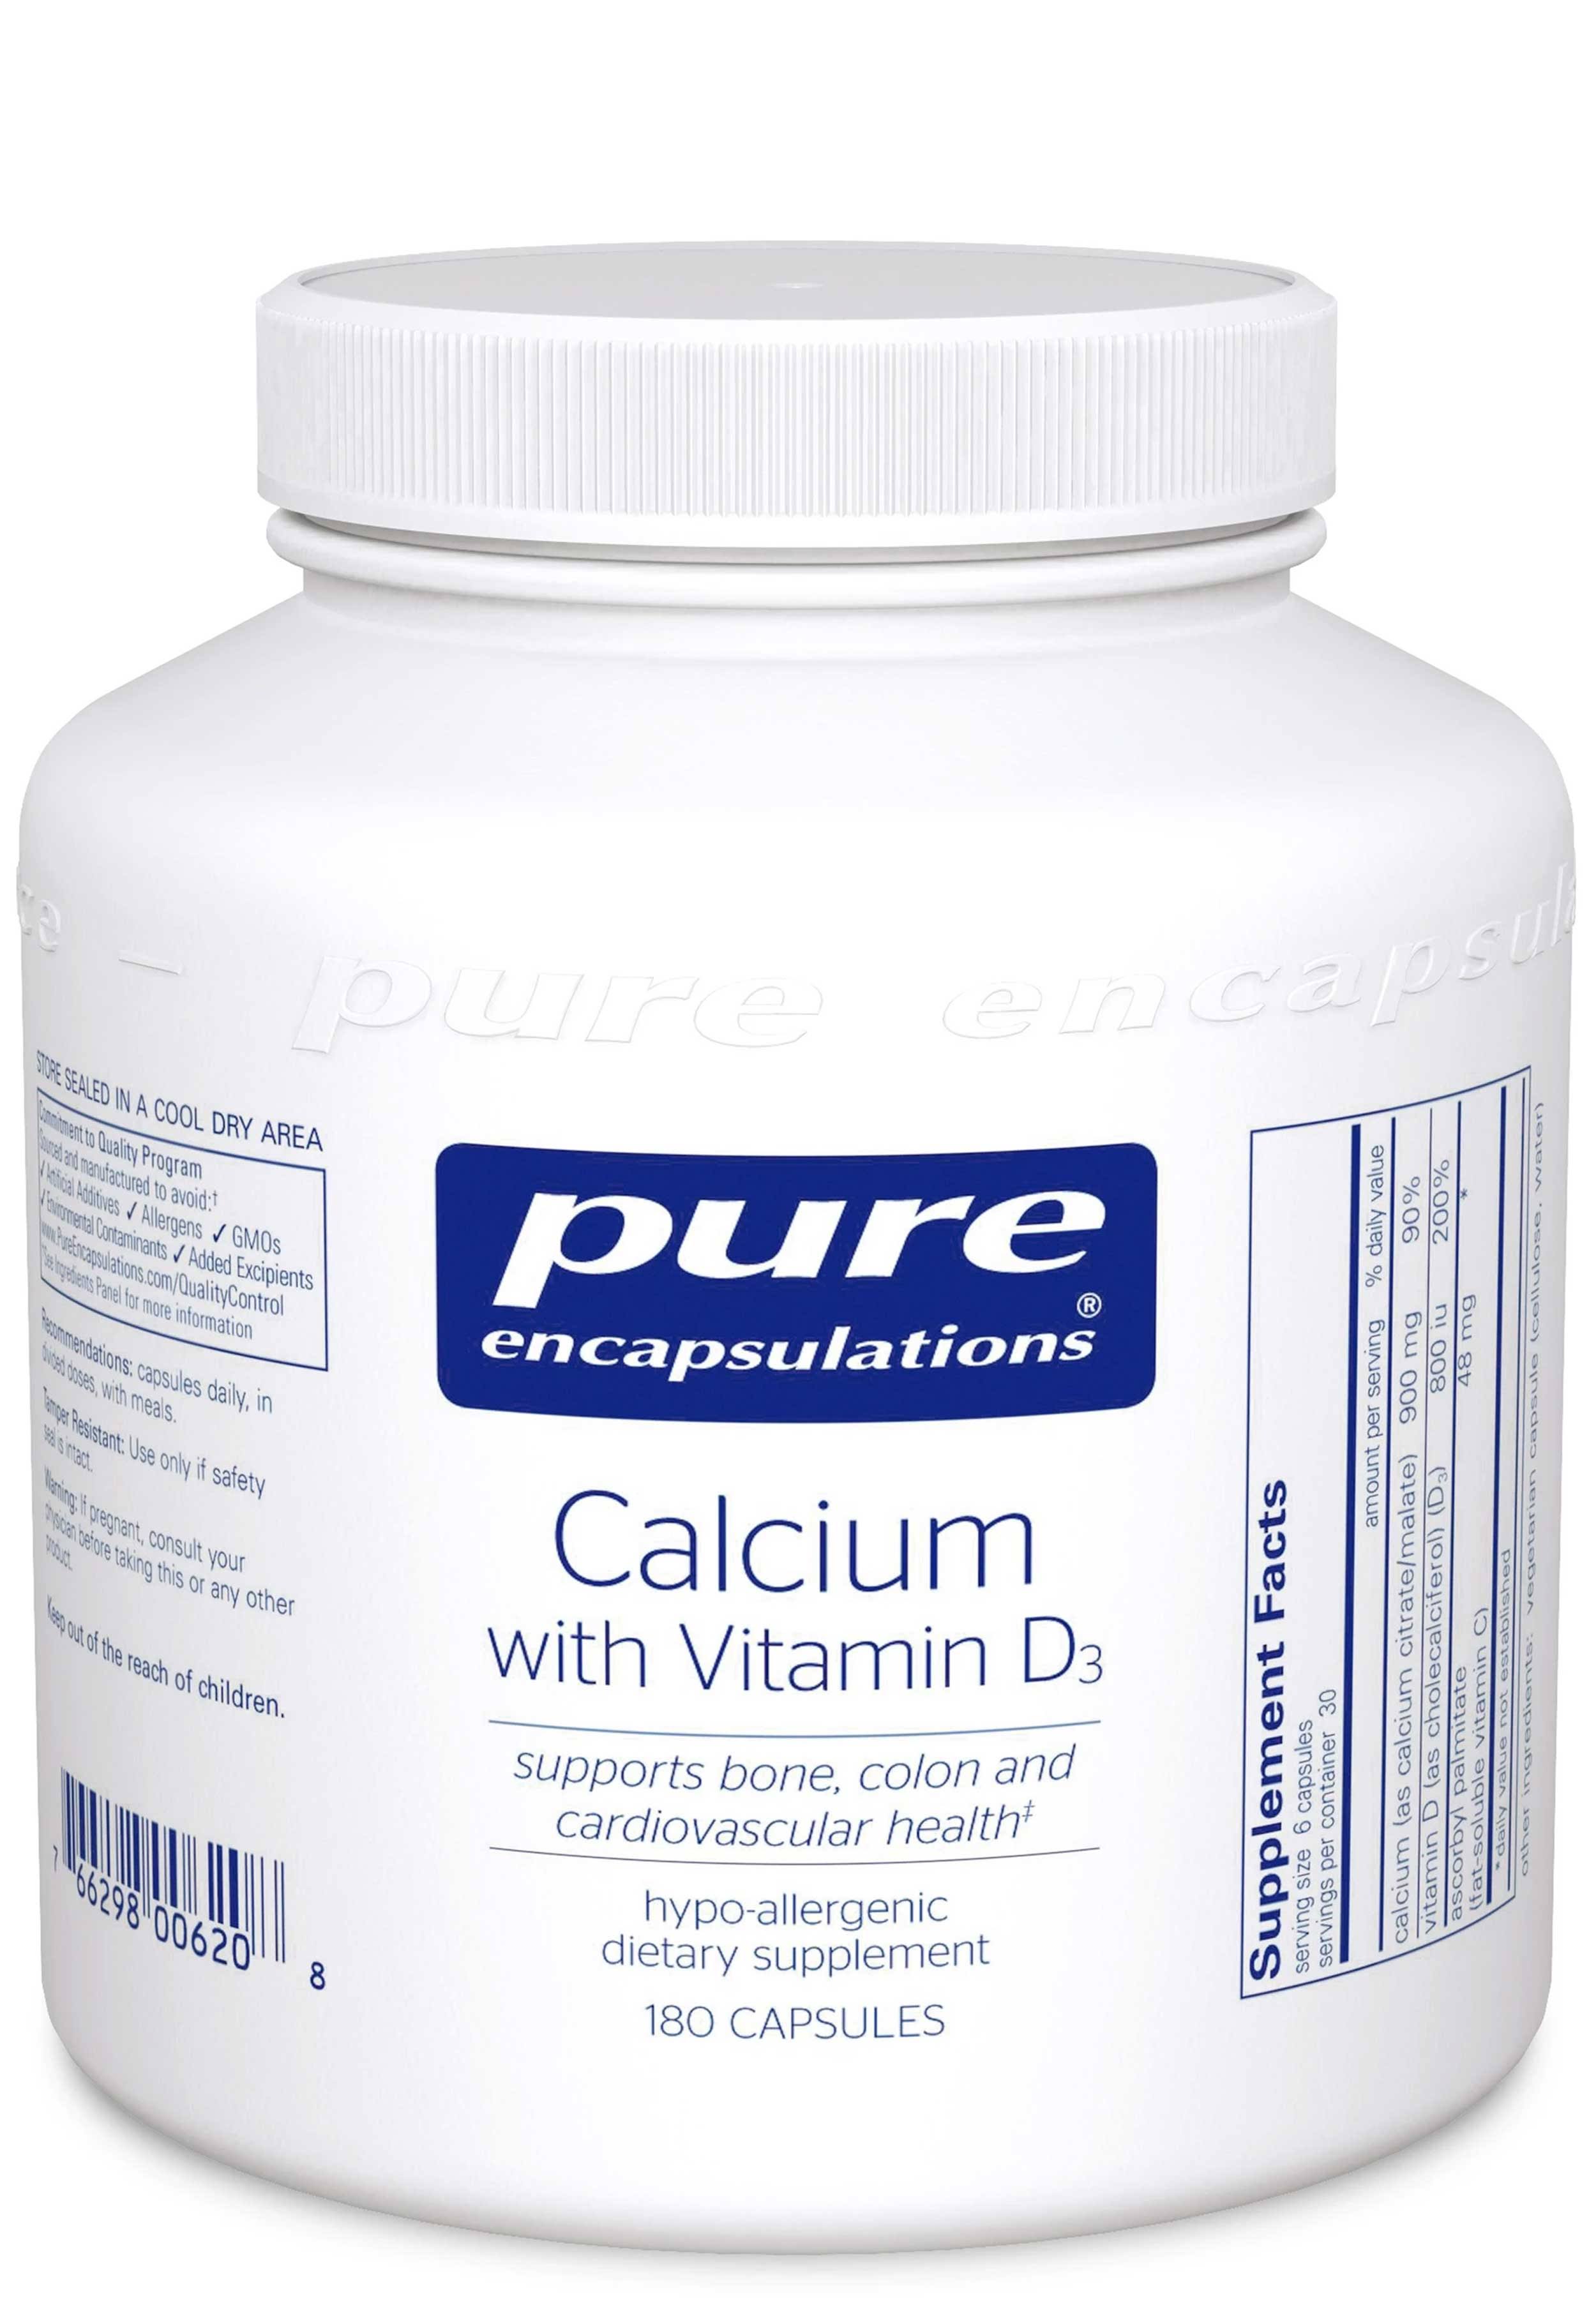 Pure Encapsulations Calcium With Vitamin D3 Dietary Supplement - 180ct